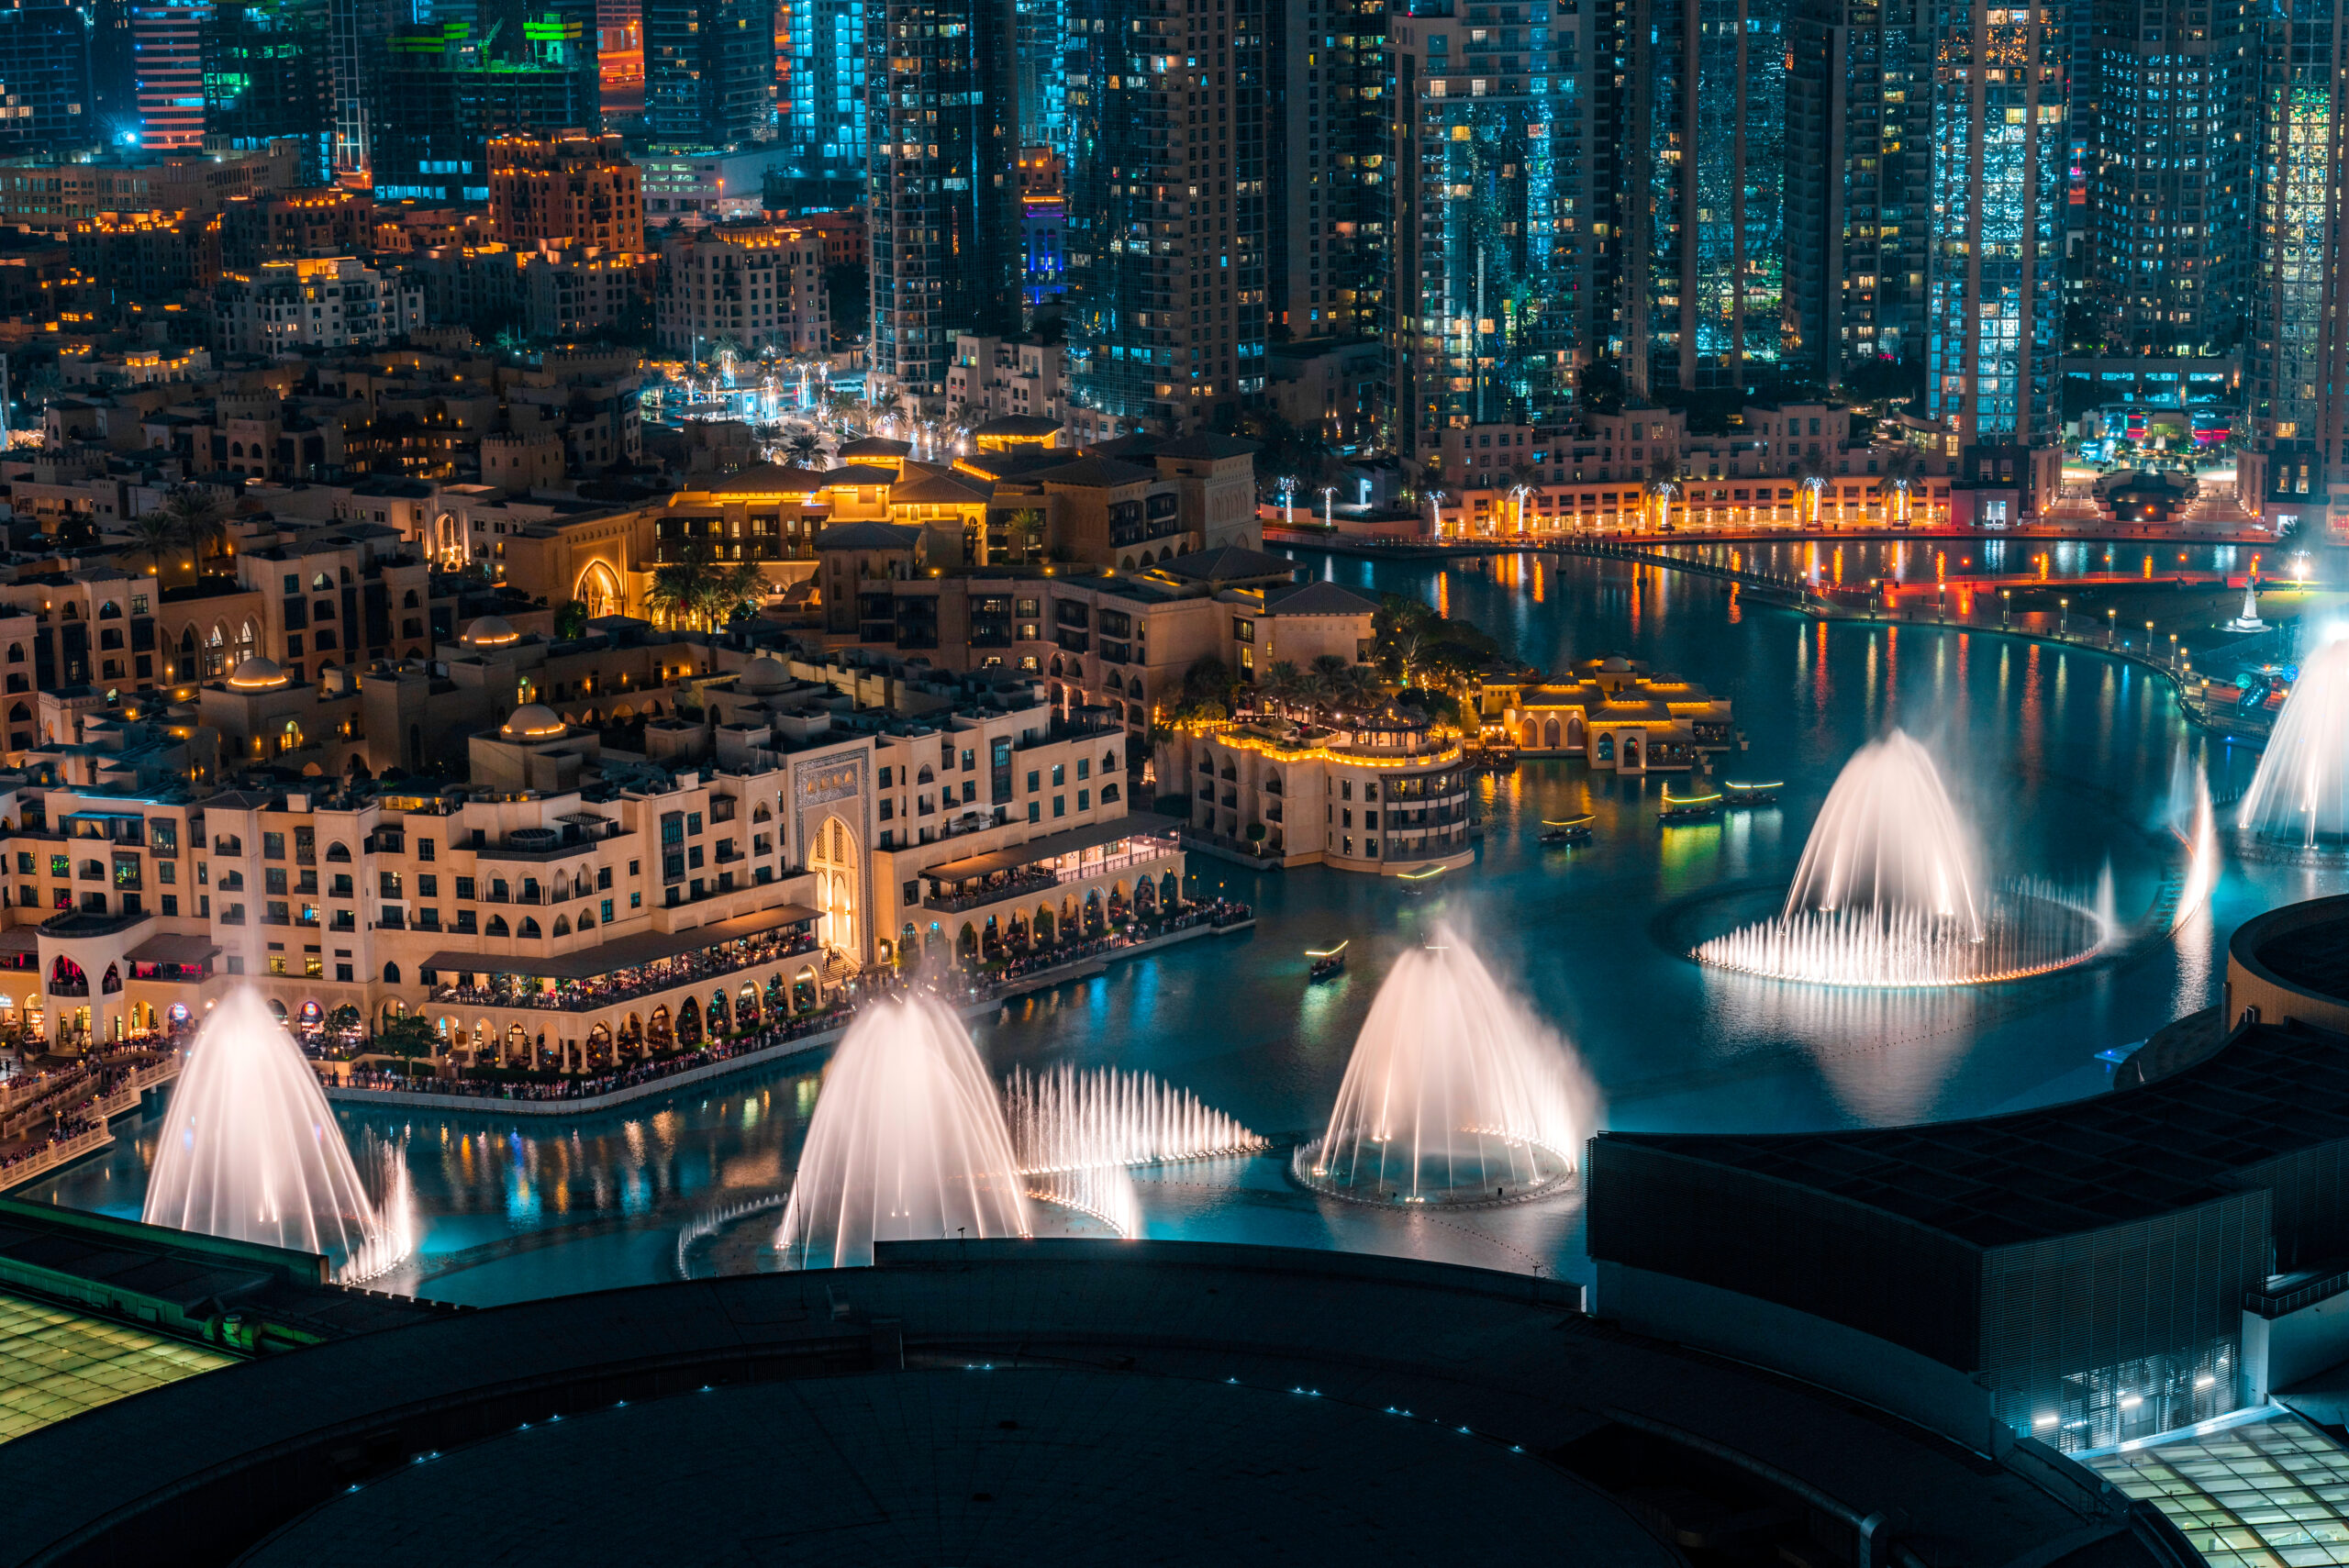 Dubai Fountain - Souk Al Bahar